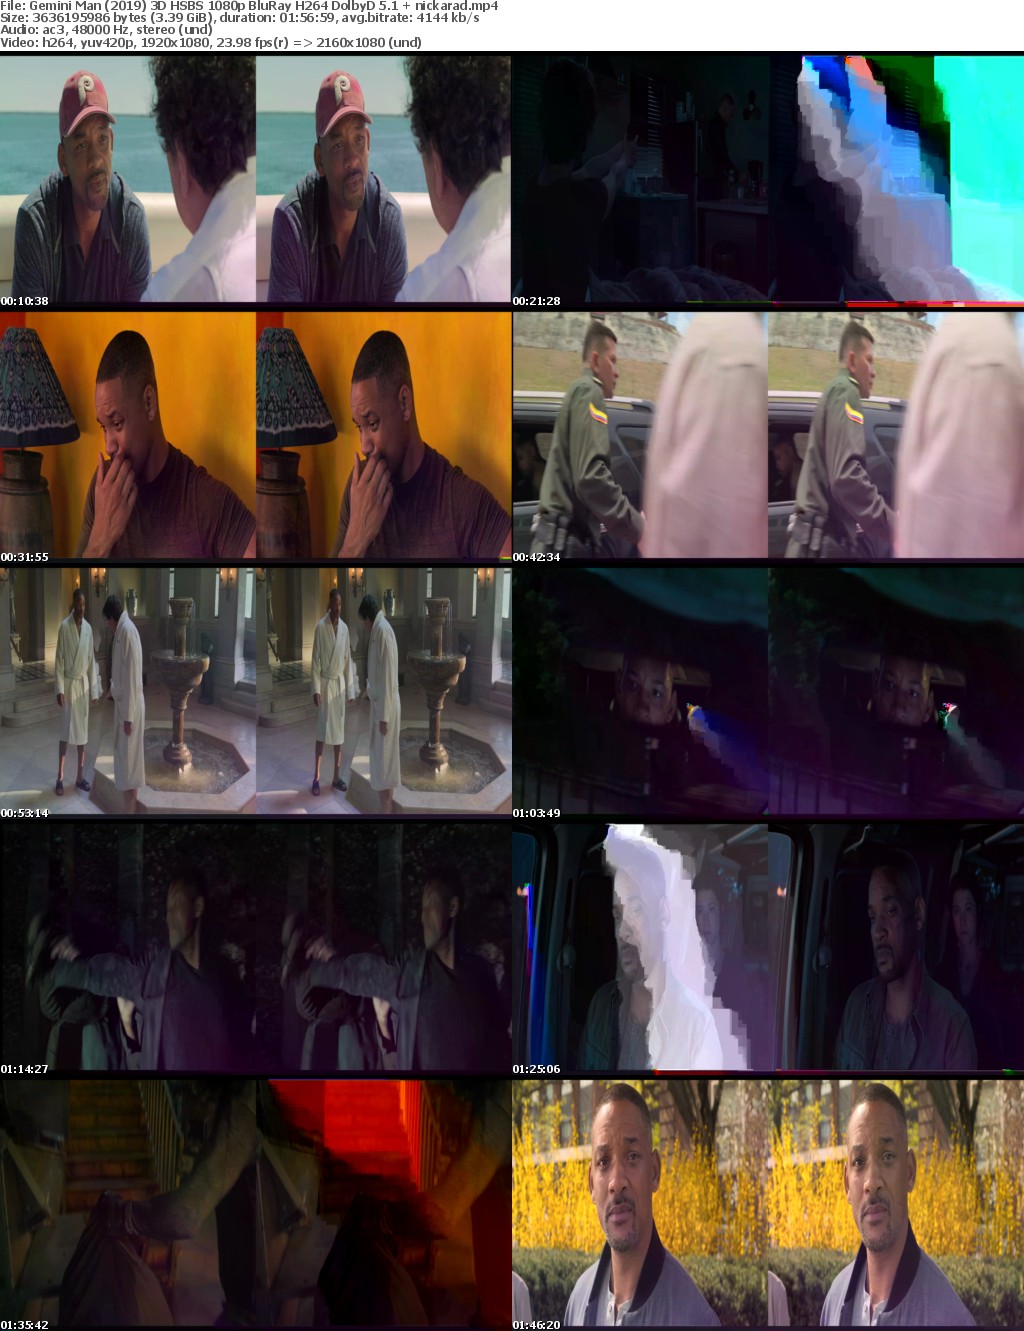 Gemini Man (2019) 3D HSBS 1080p BluRay H264 DolbyD 5 1 nickarad